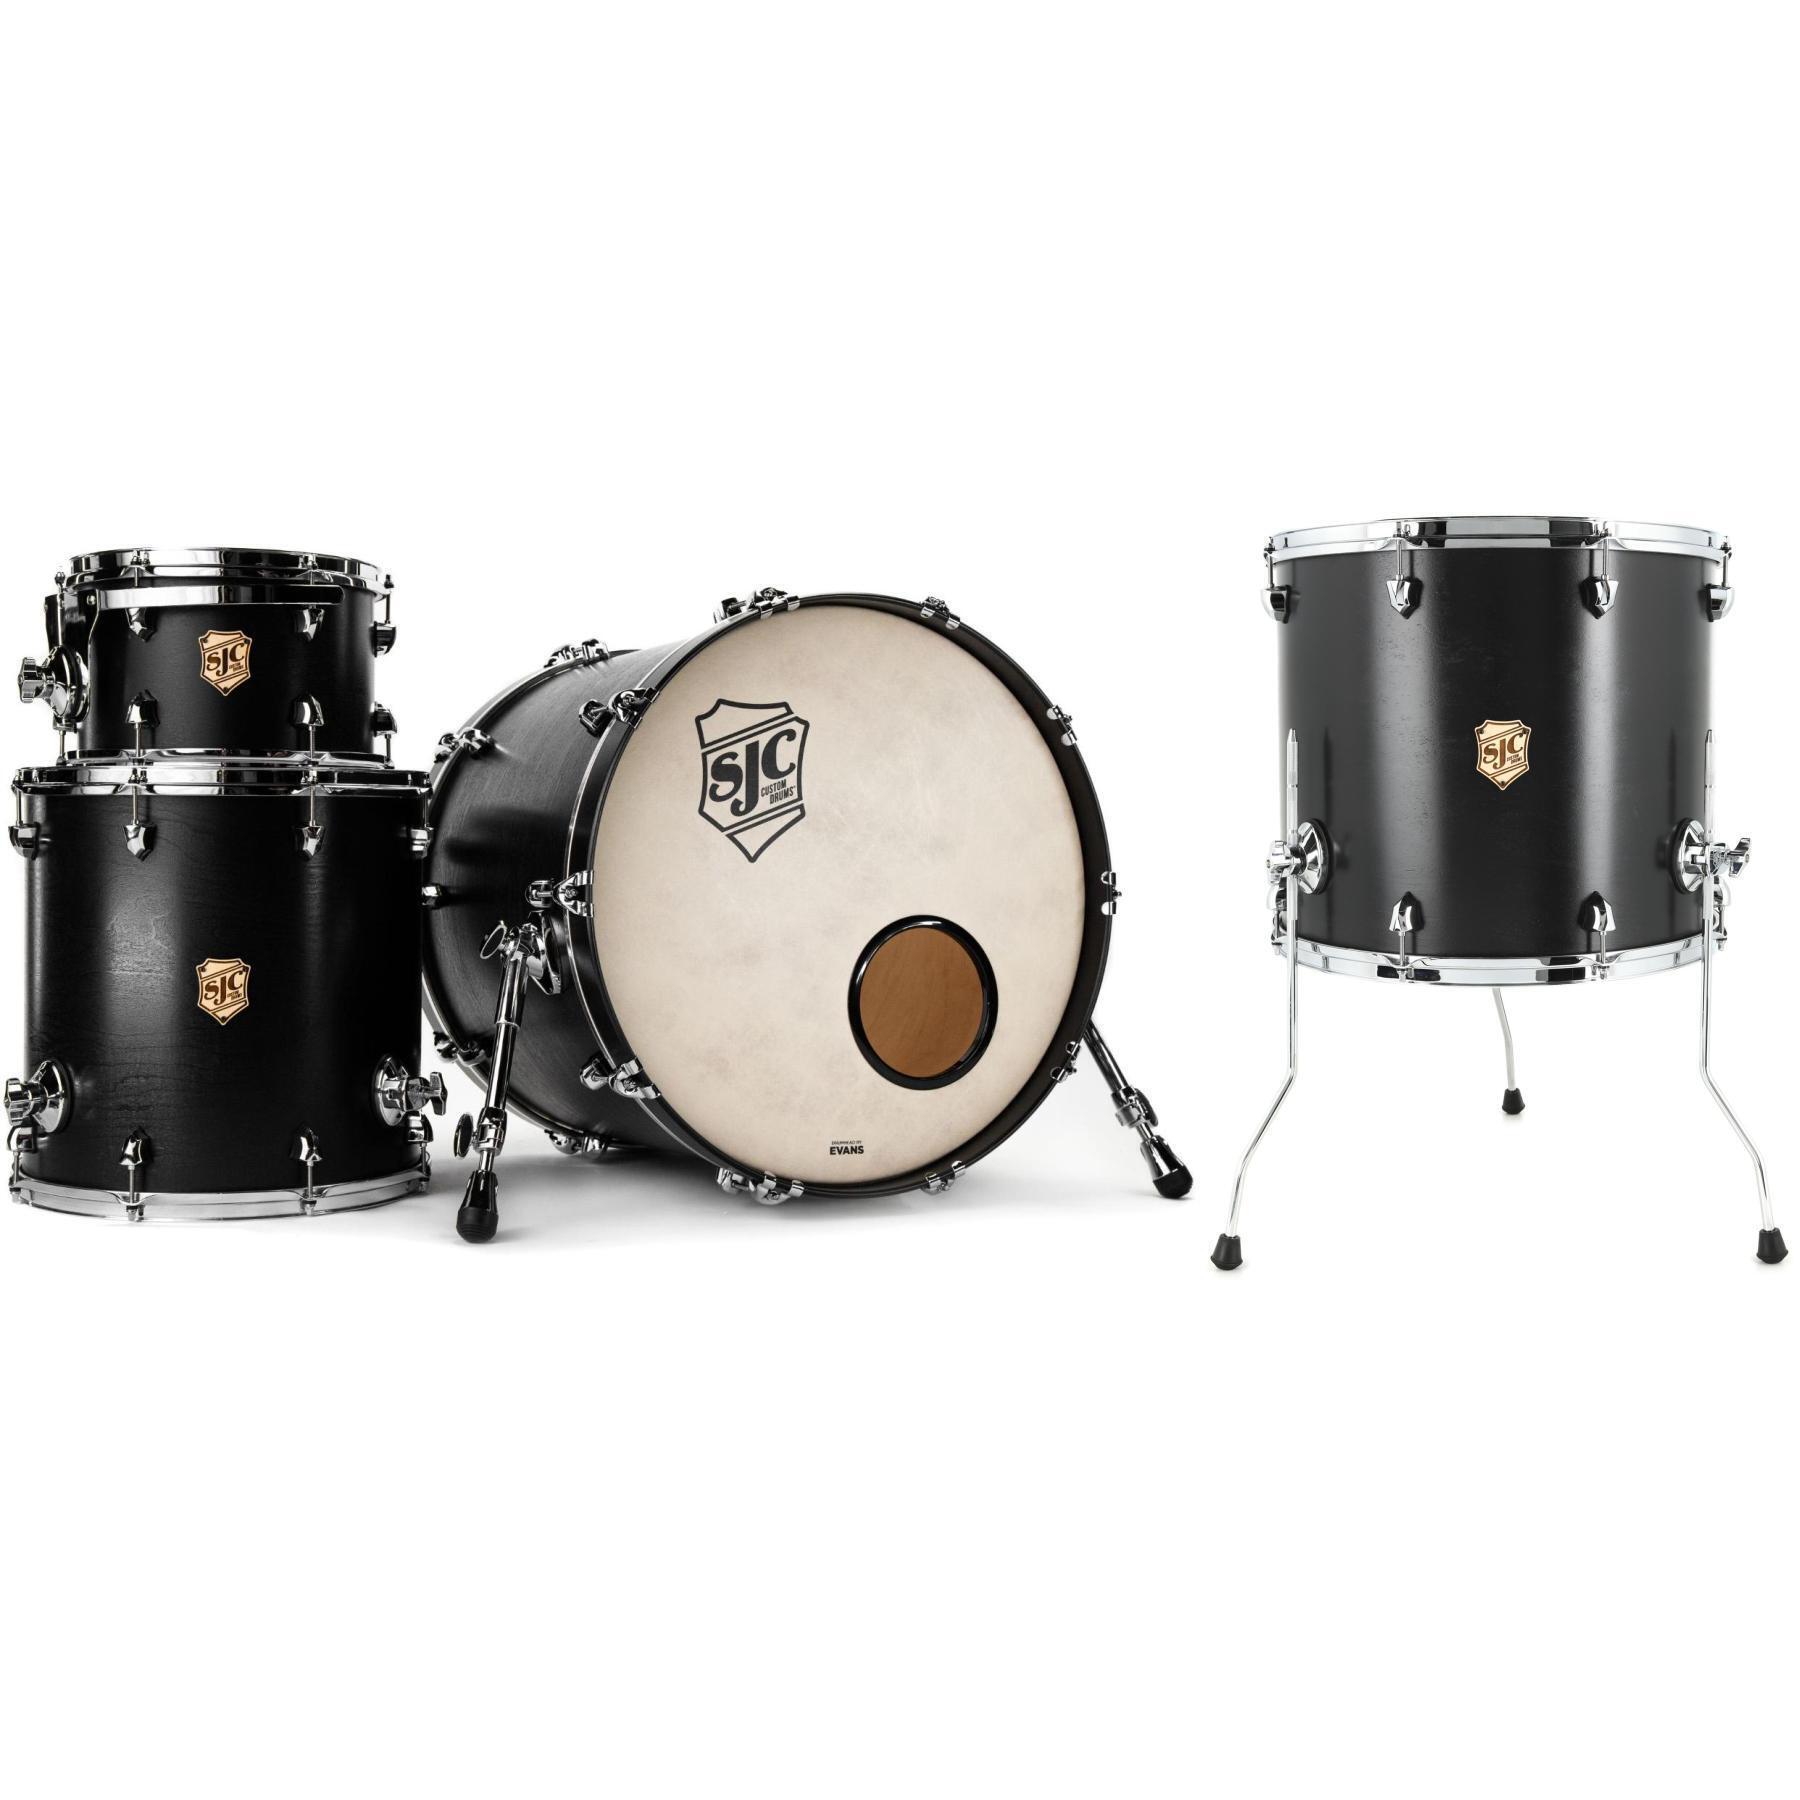 SJC Custom Drums Tour Series 4-piece Shell Pack (Dual Floor Tom) - Matte  Black